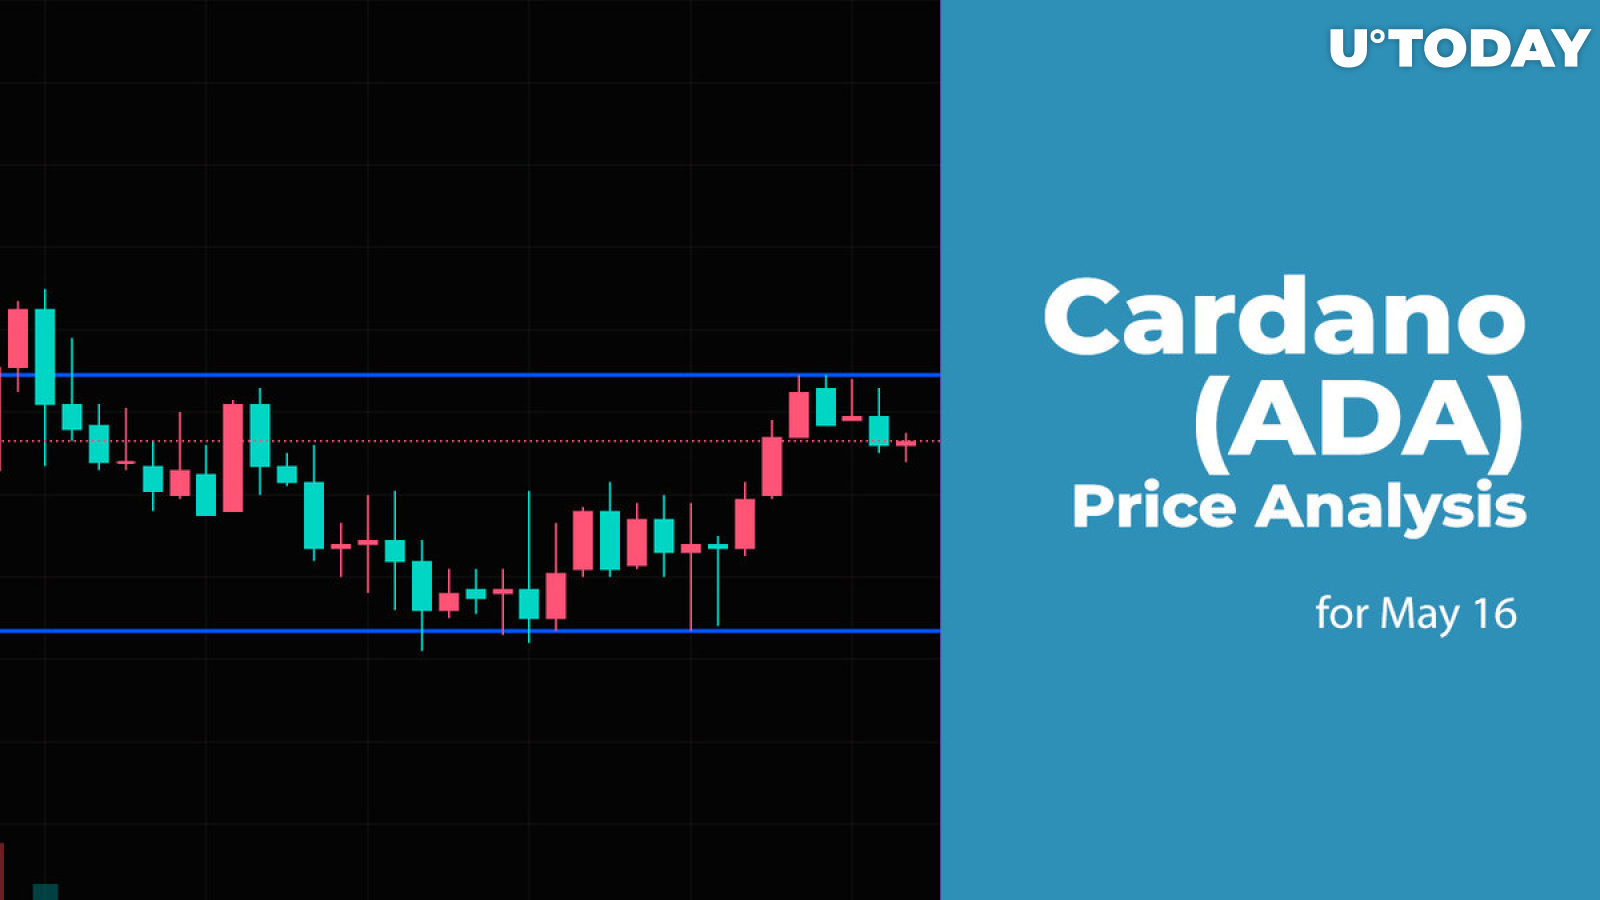 Cardano (ADA) Price Analysis for May 16